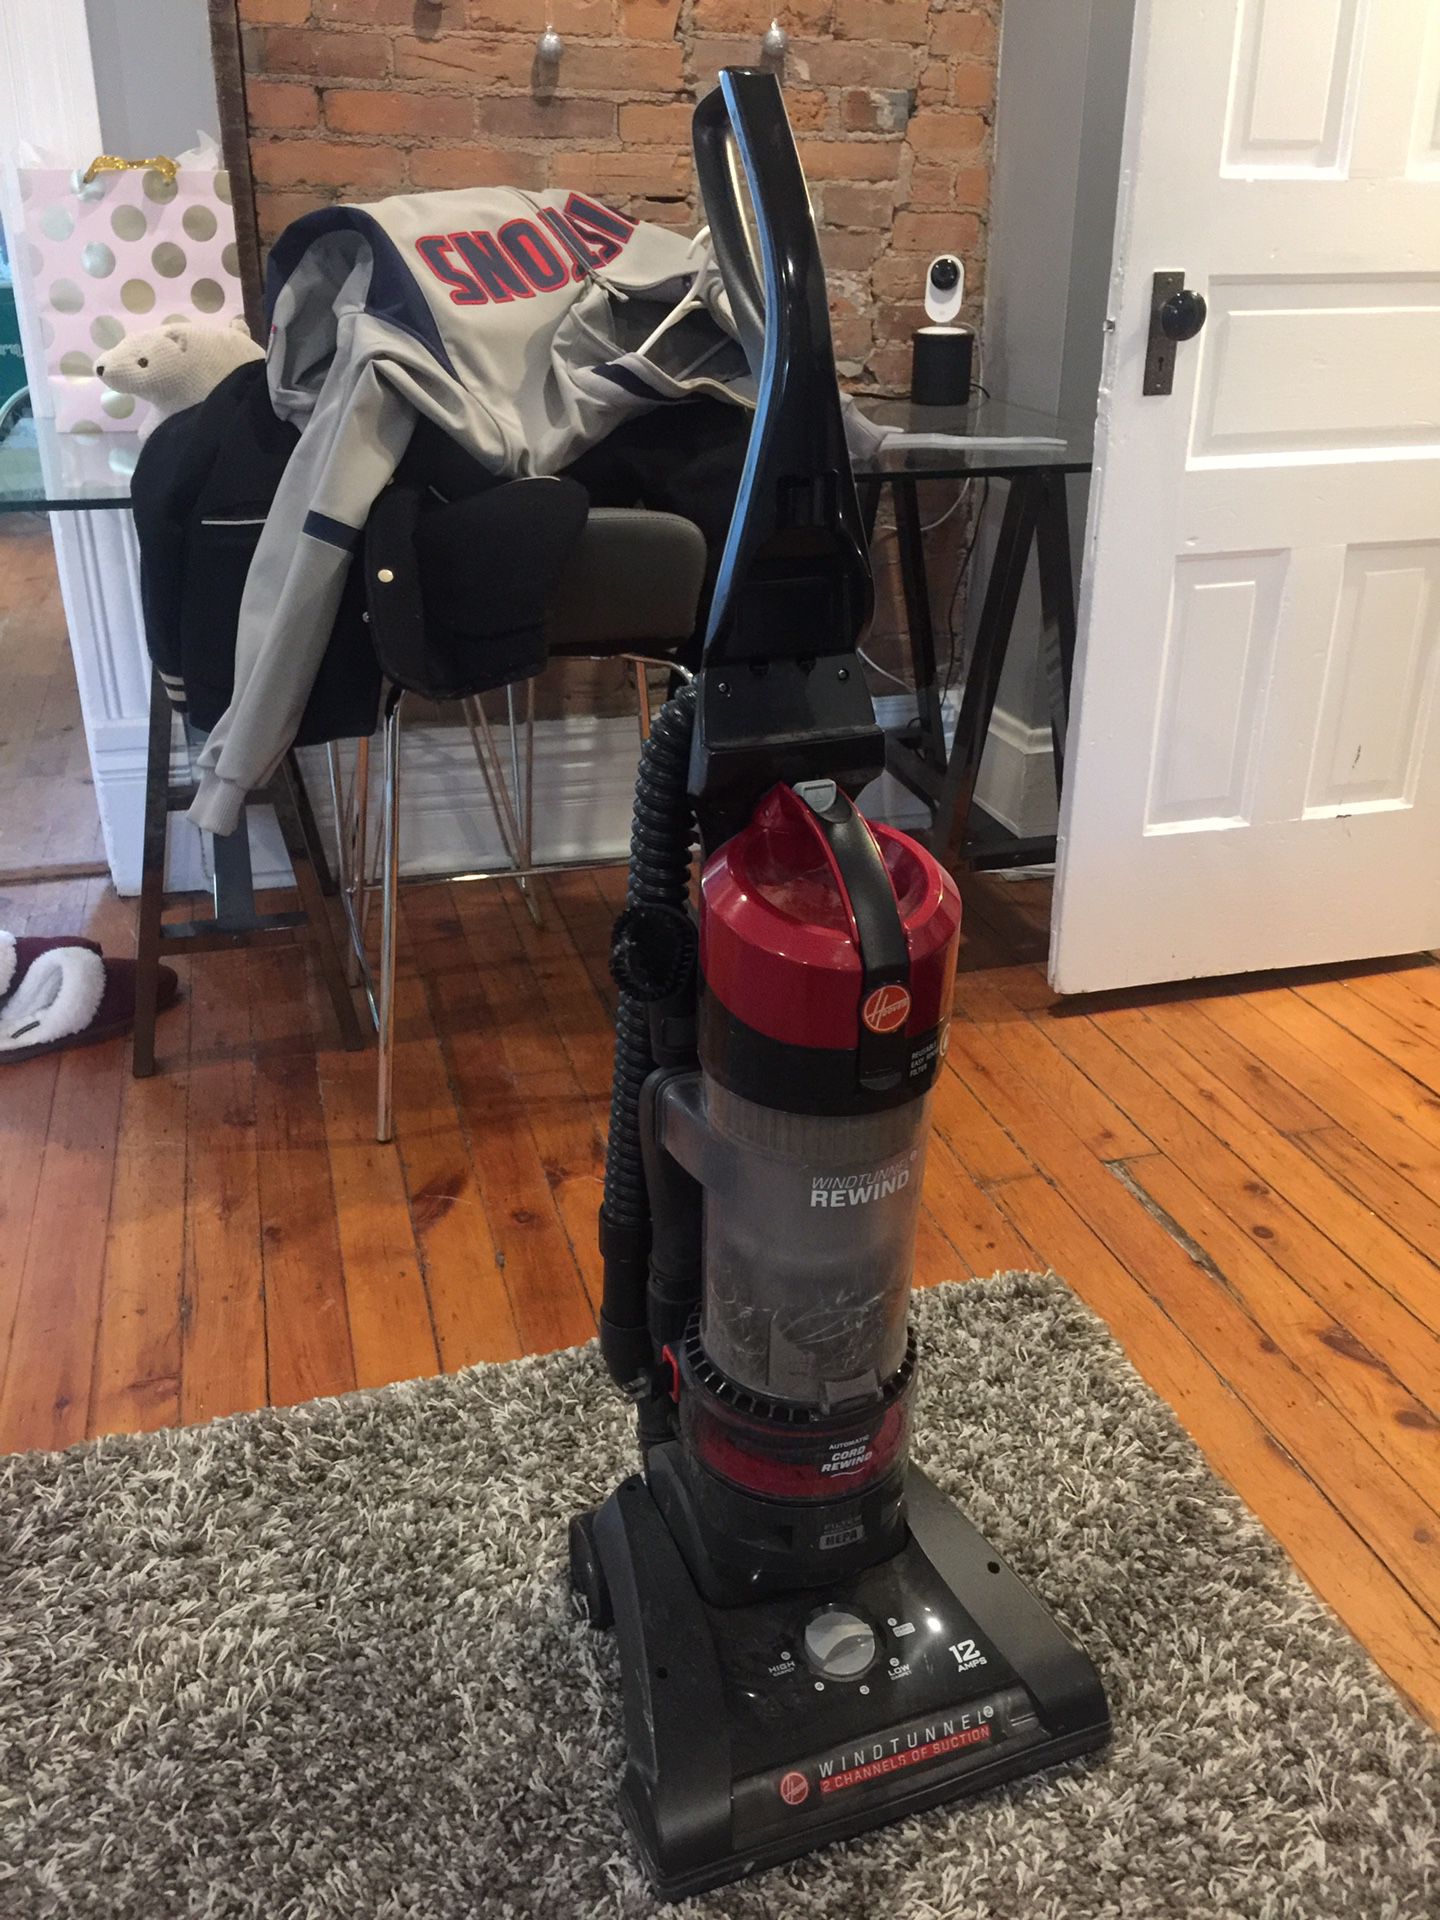 Hoover Vacuum - Works perfect